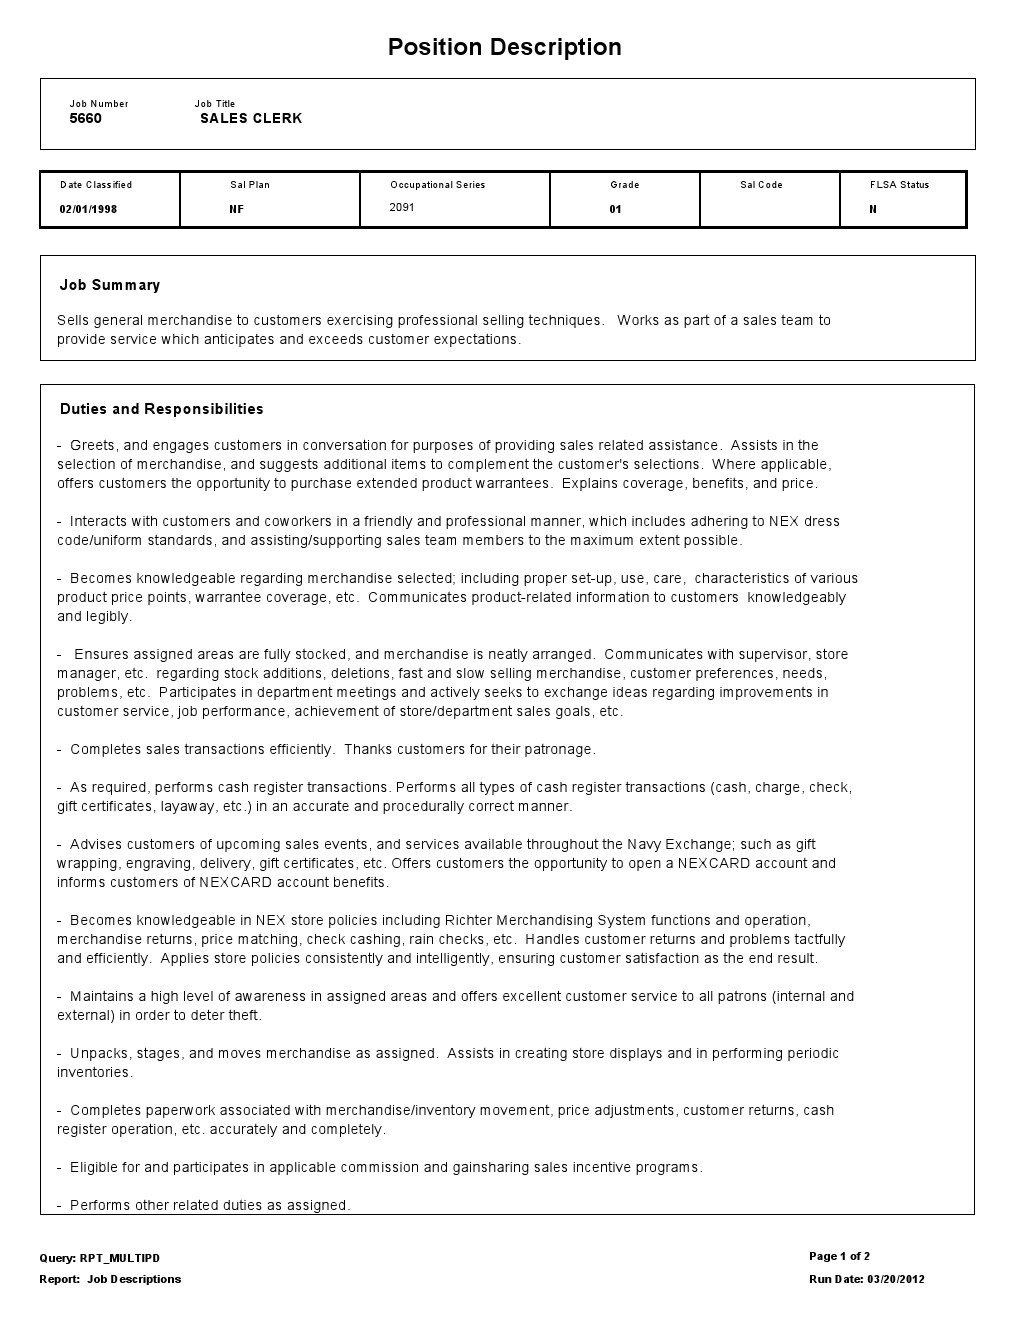 Warehouse worker job description resume